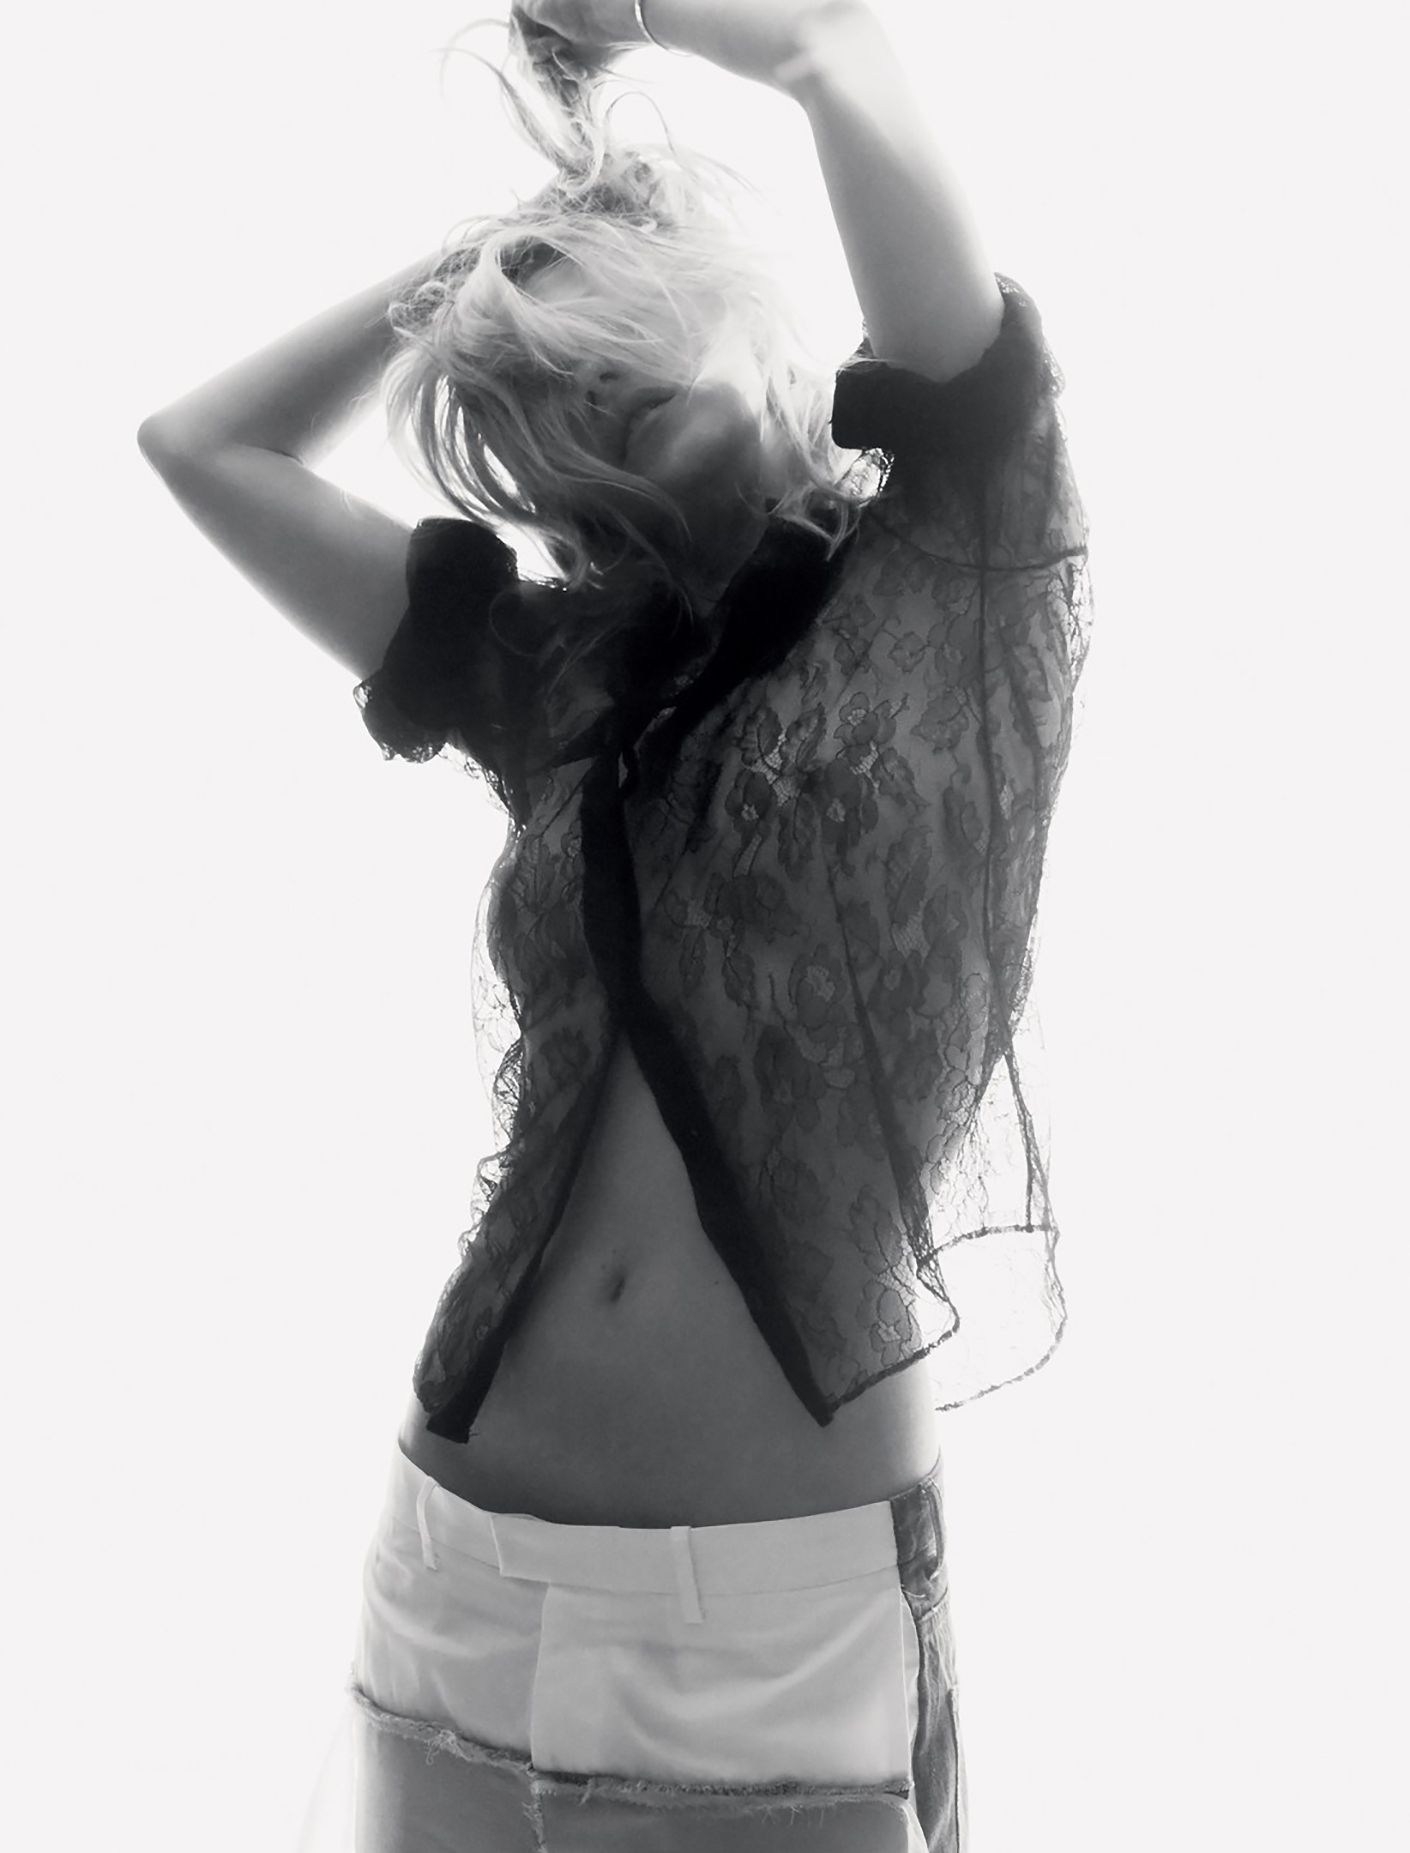 Kate Moss See-Through pics